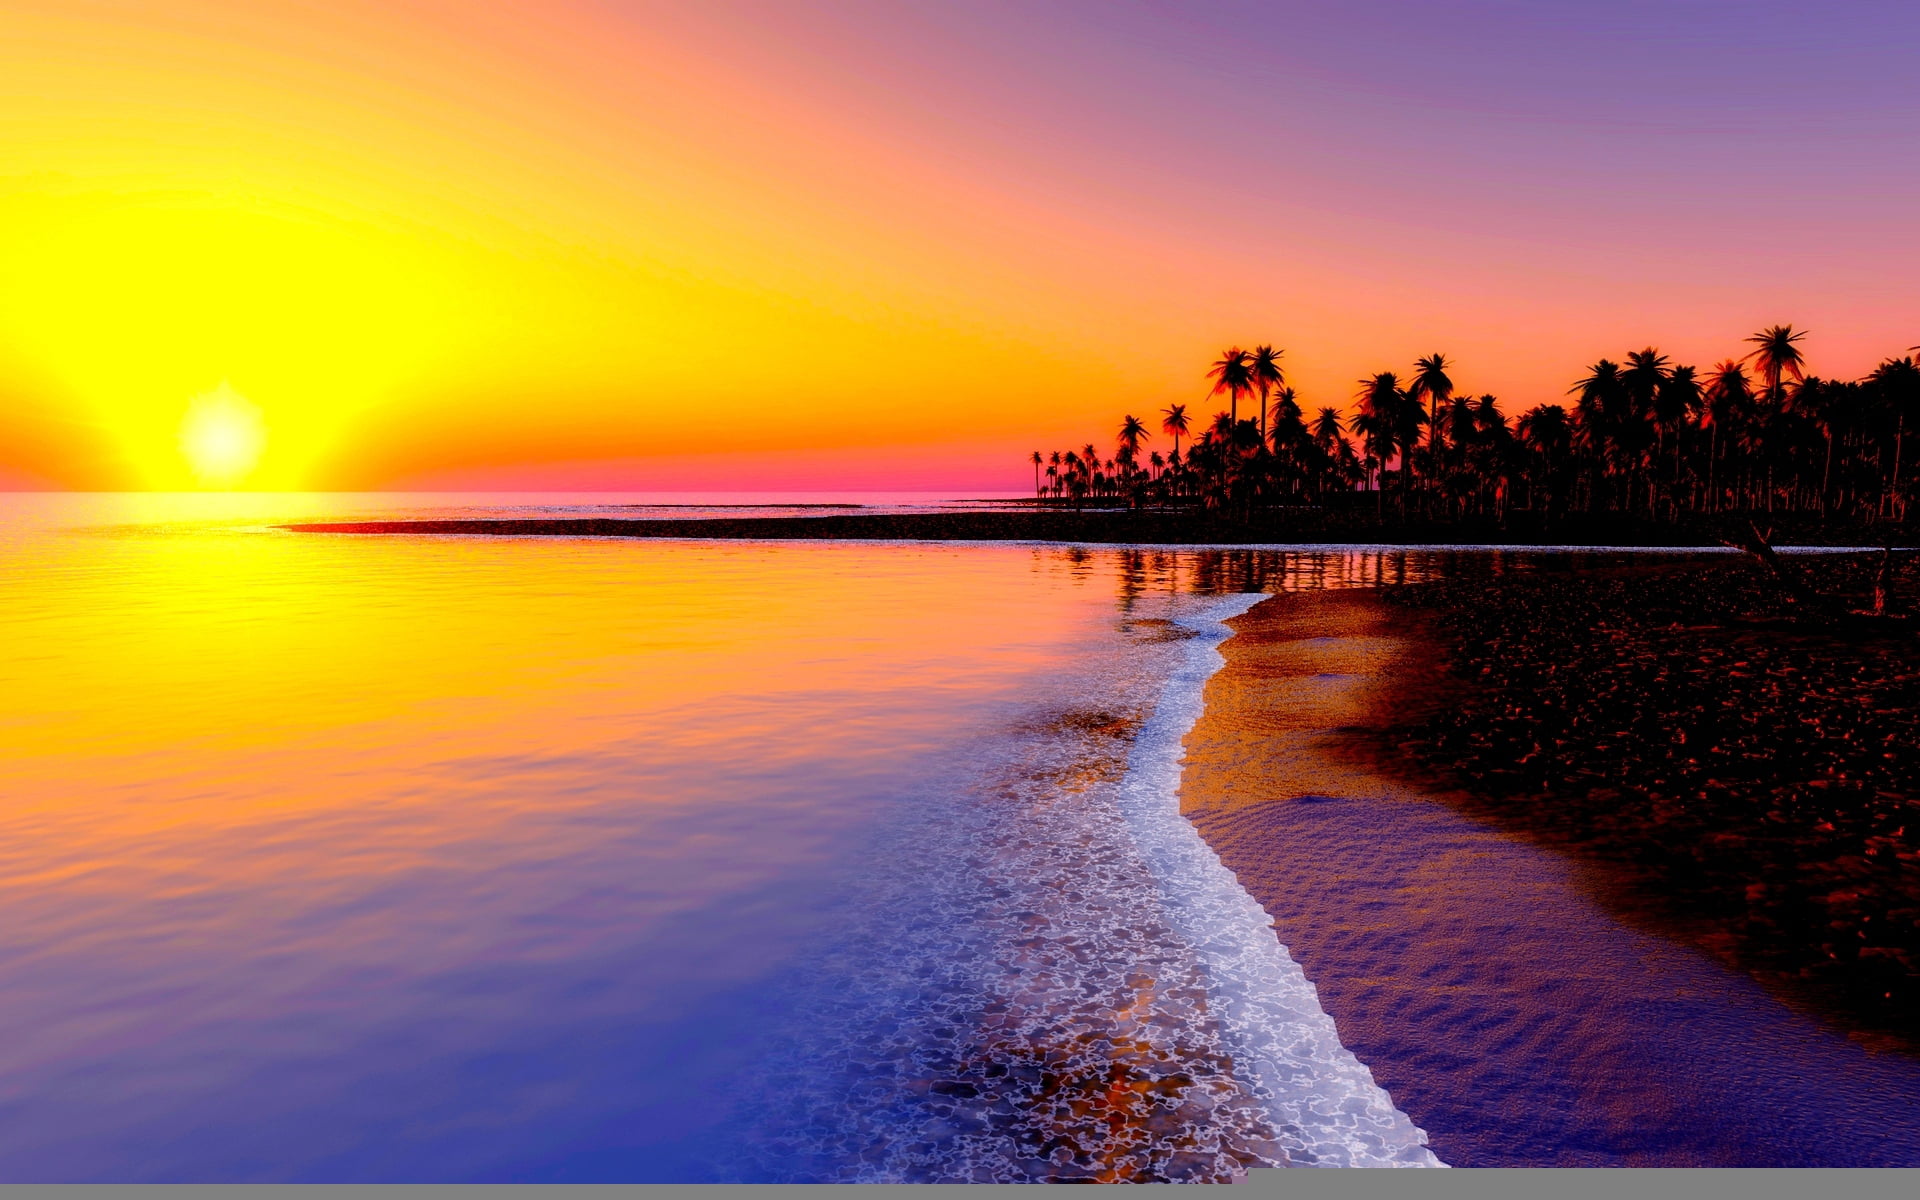 blue sea during sunset photography, beach, tropics, sand, palm trees